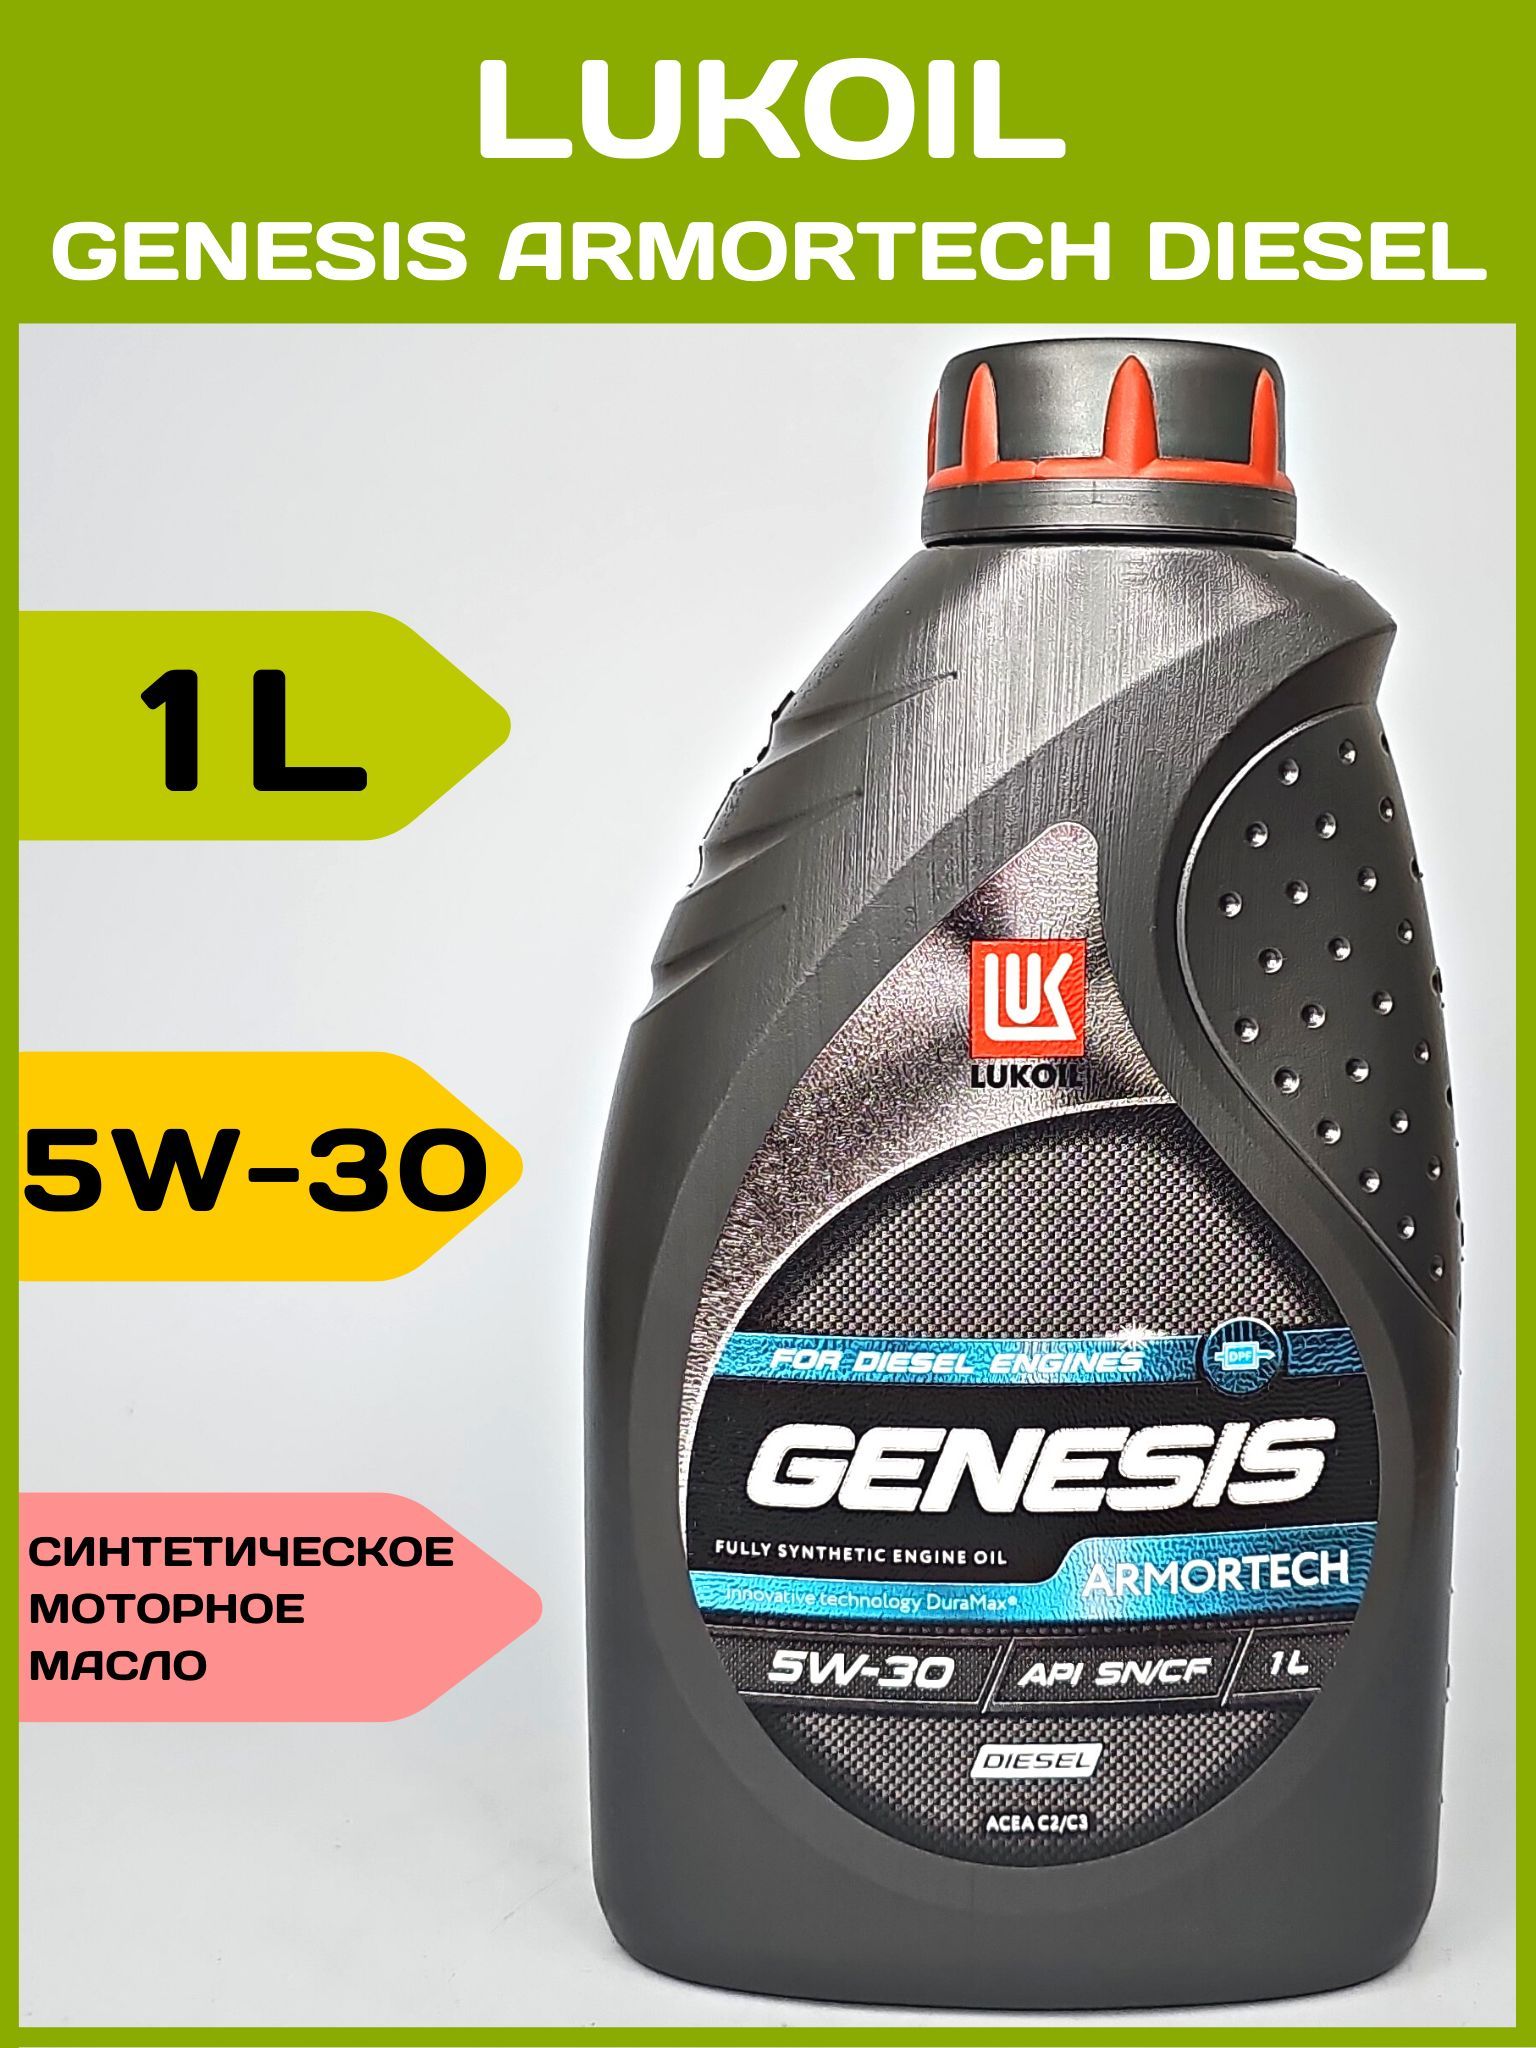 Lukoil Genesis Armortech dexos2. Lukoil Genesis 5w30. Лукойл Генезис 5в30 дизель. Армотек масло Генезис 5w-30. Лукойл 5 30 отзывы